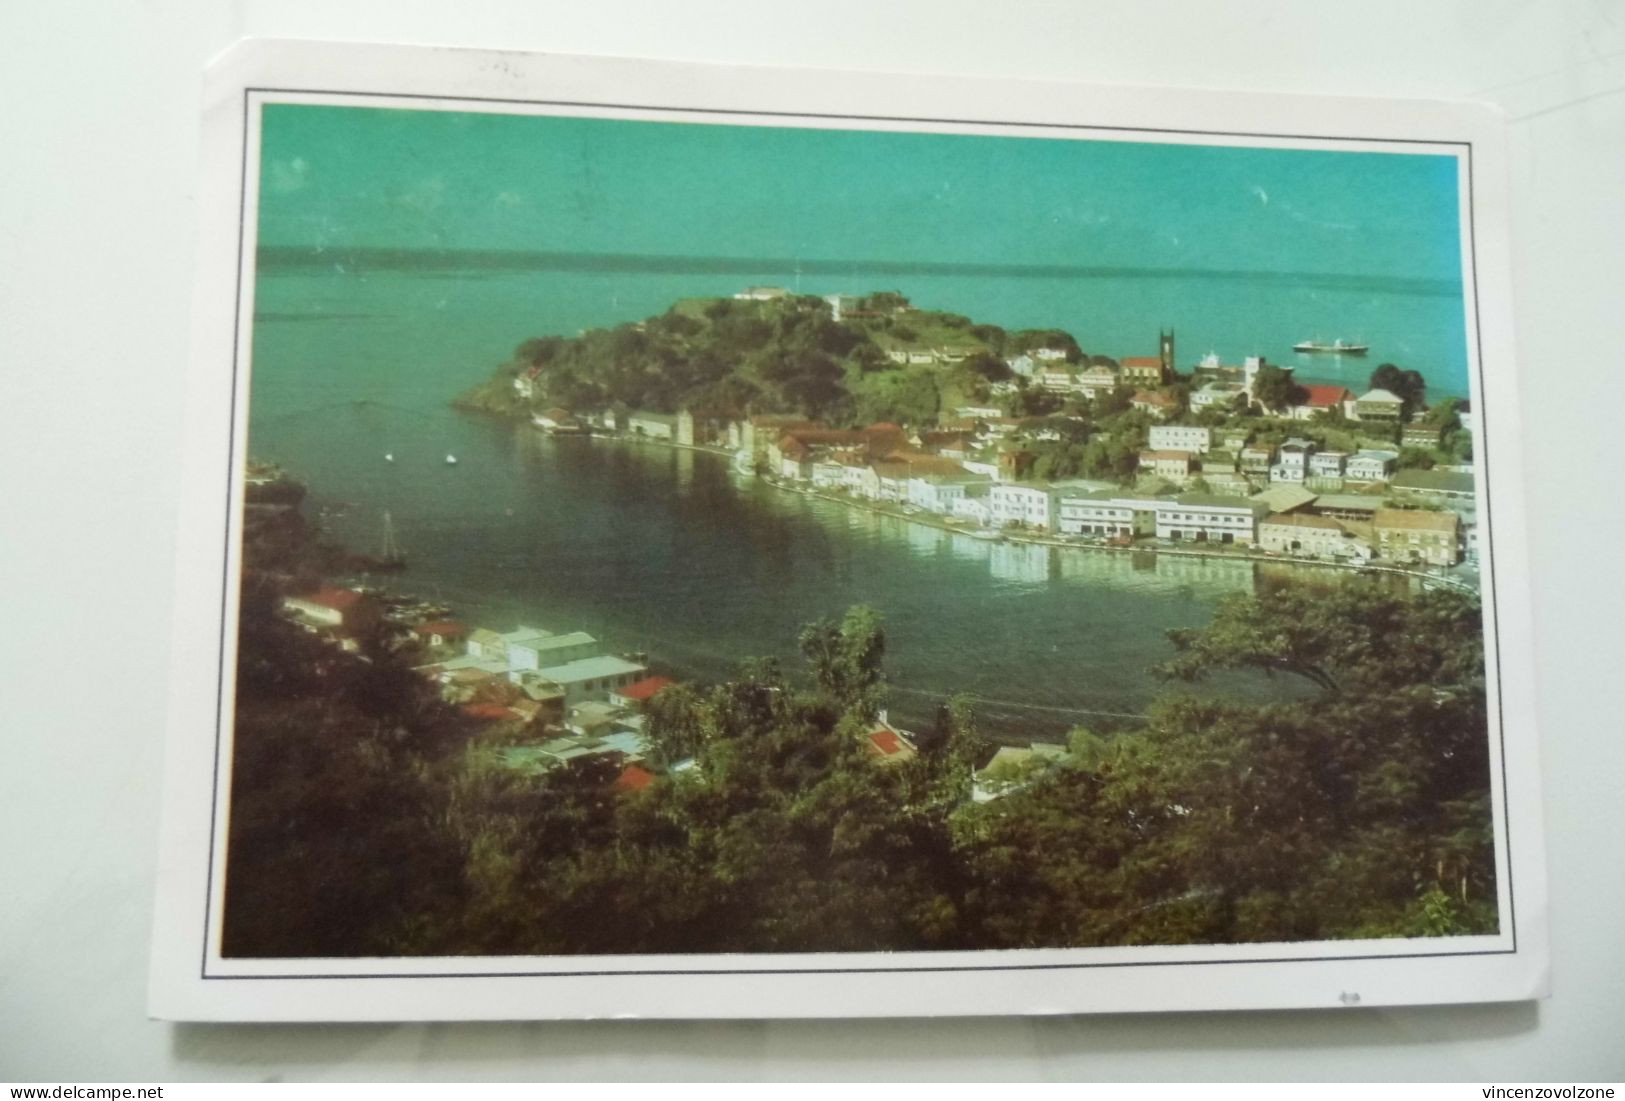 Cartolina Viaggiata "ST. GEORGE'S, GRENADA" 1995 - Grenada